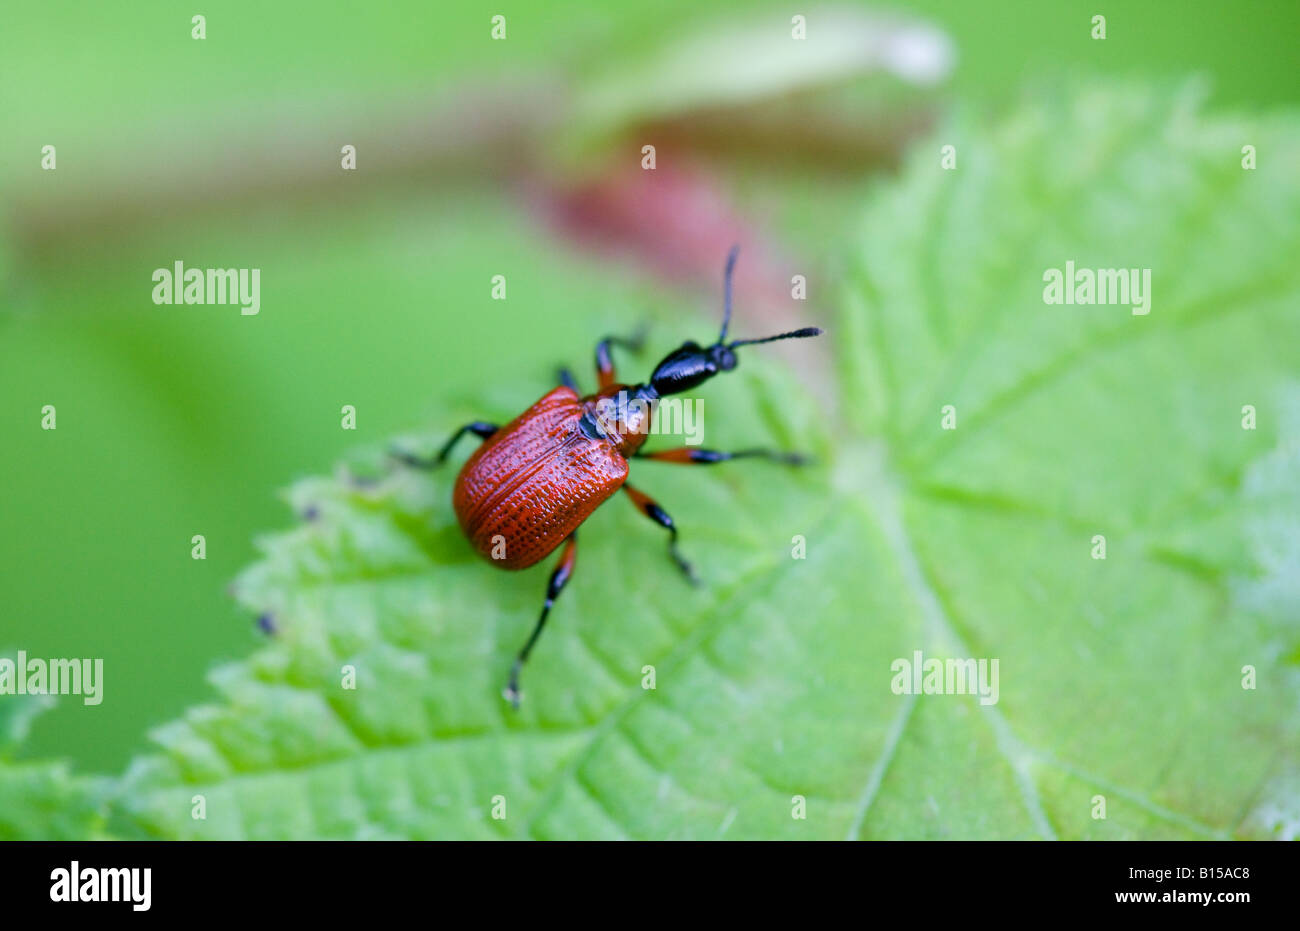 Weevil species Apoderus coryli adult beetle on a leaf Stock Photo